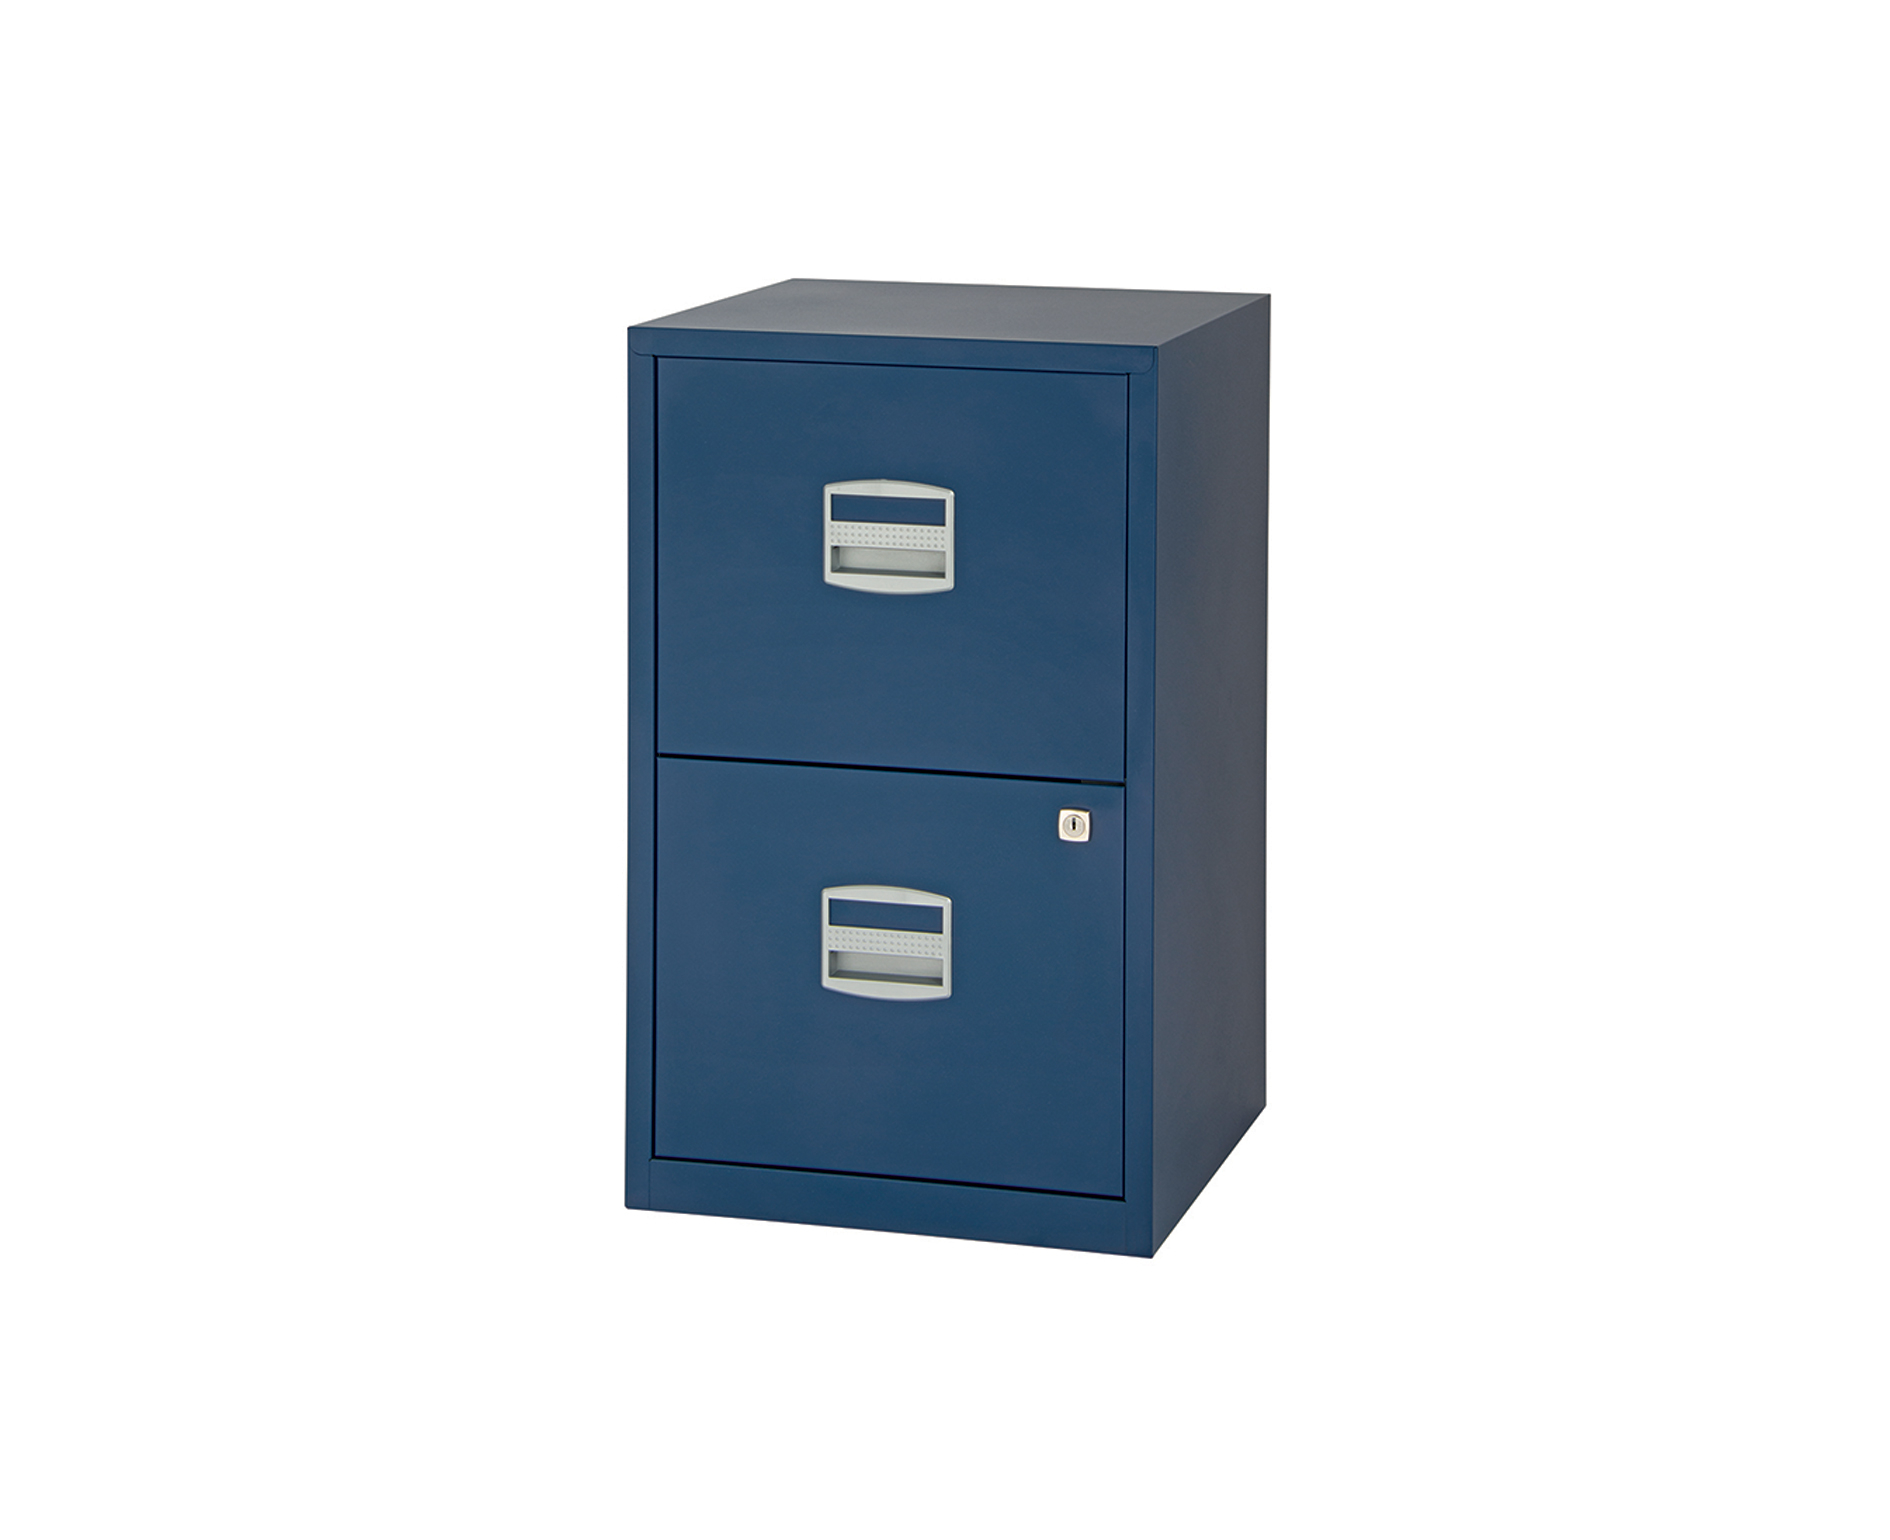 Blue Filing Cabinets Storage Shelving Furniture Storage Ryman throughout sizing 1890 X 1540